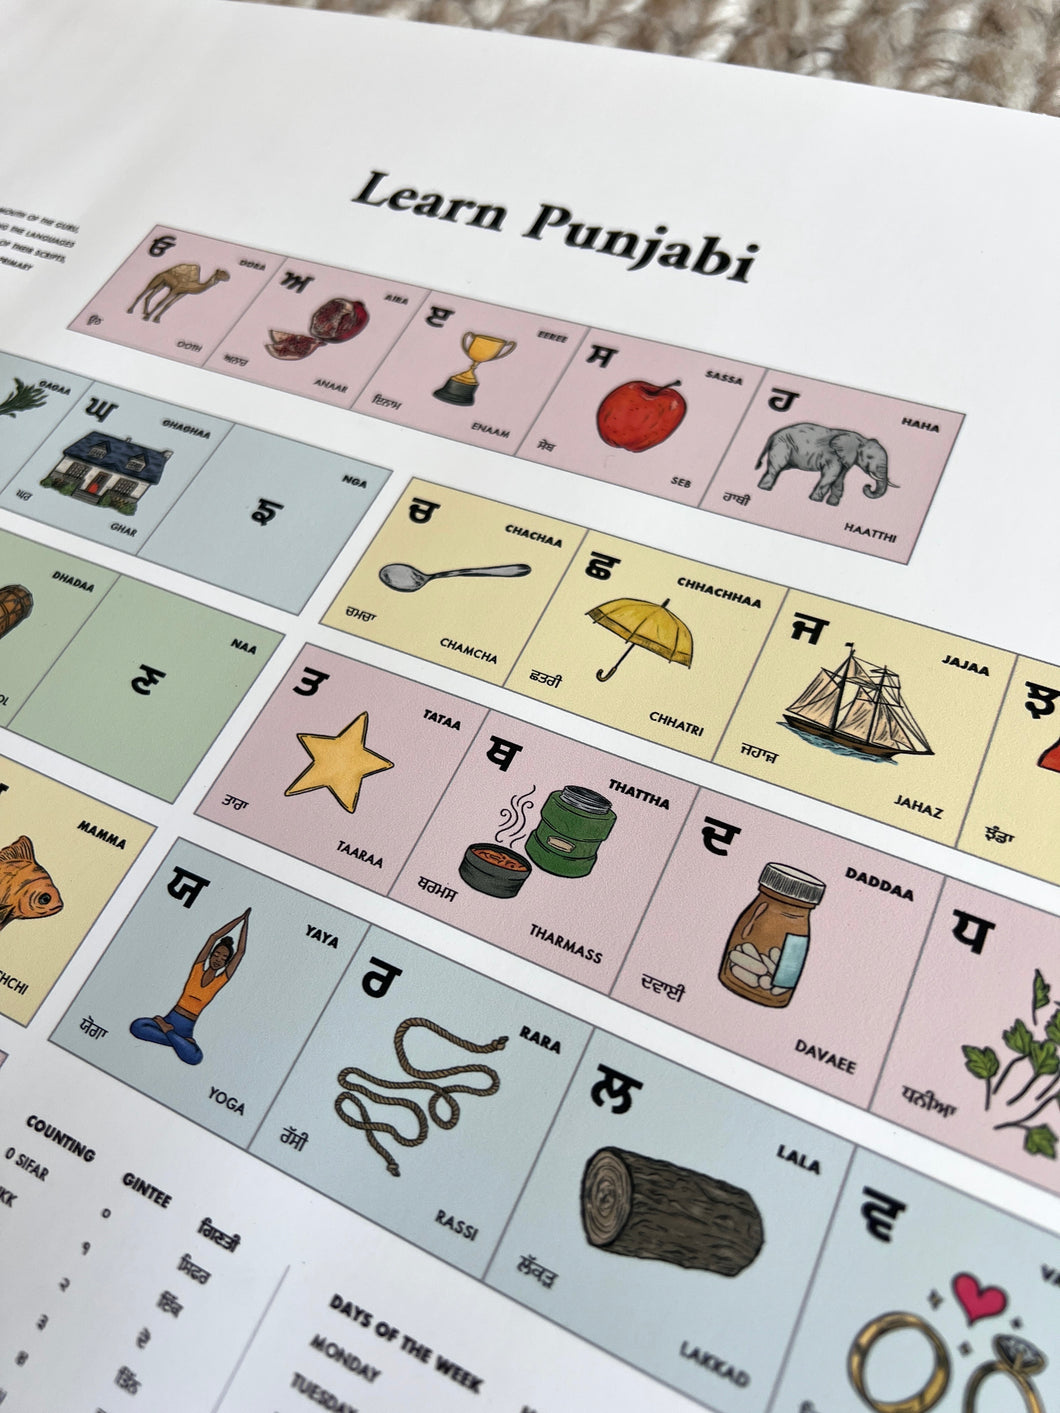 Learn Punjabi Poster